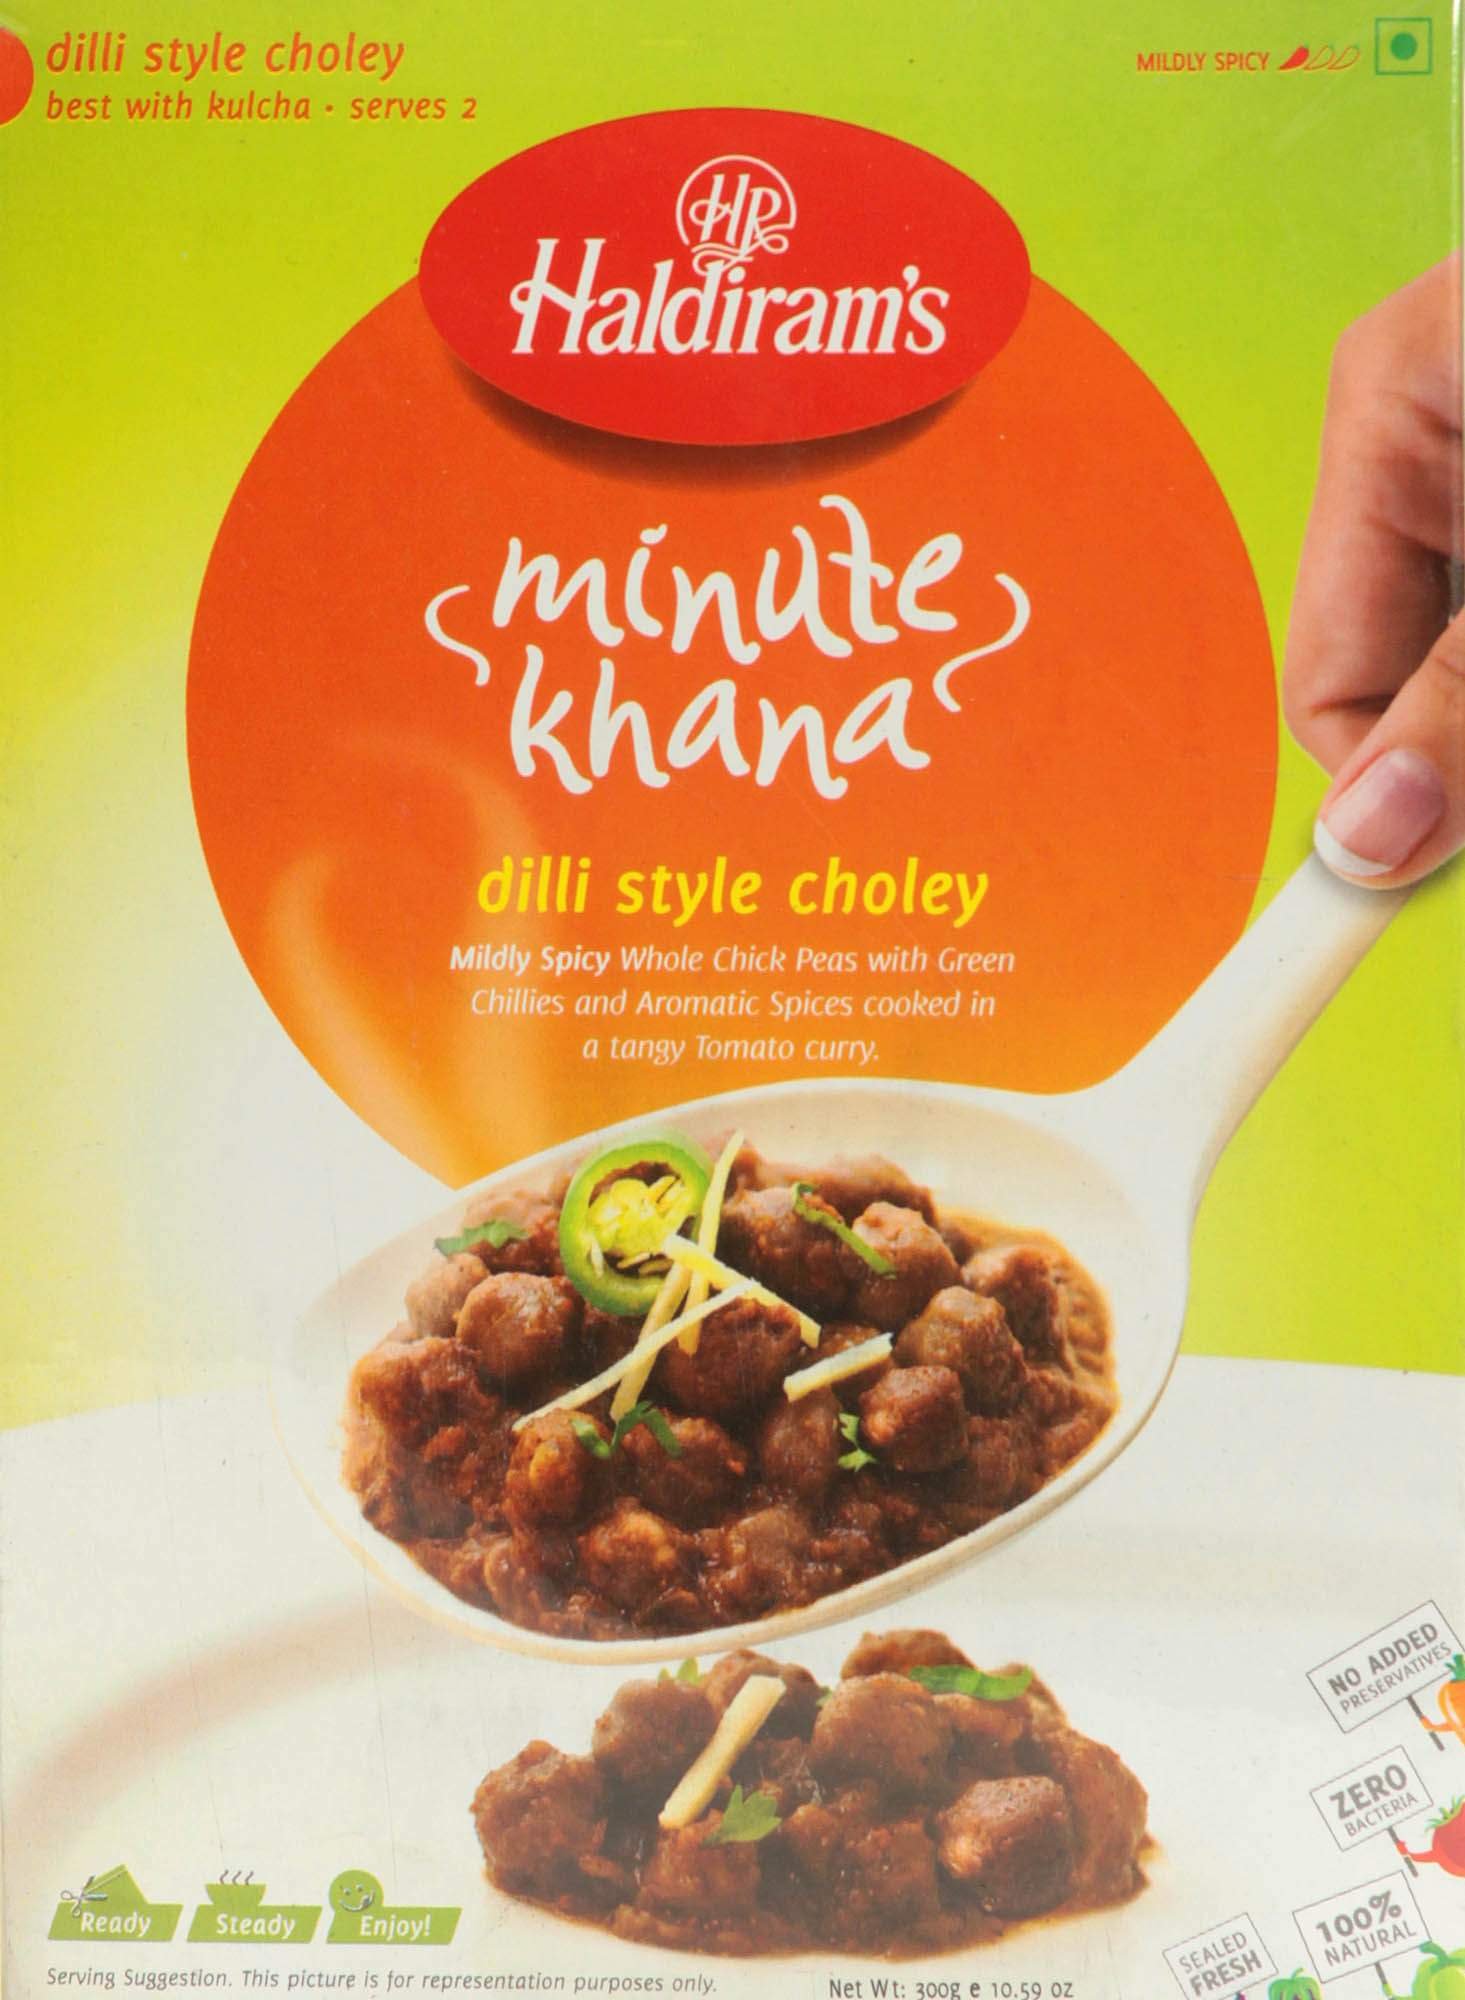 Haldiram's 5 Minute Food - Dilli Style Choley - book cover